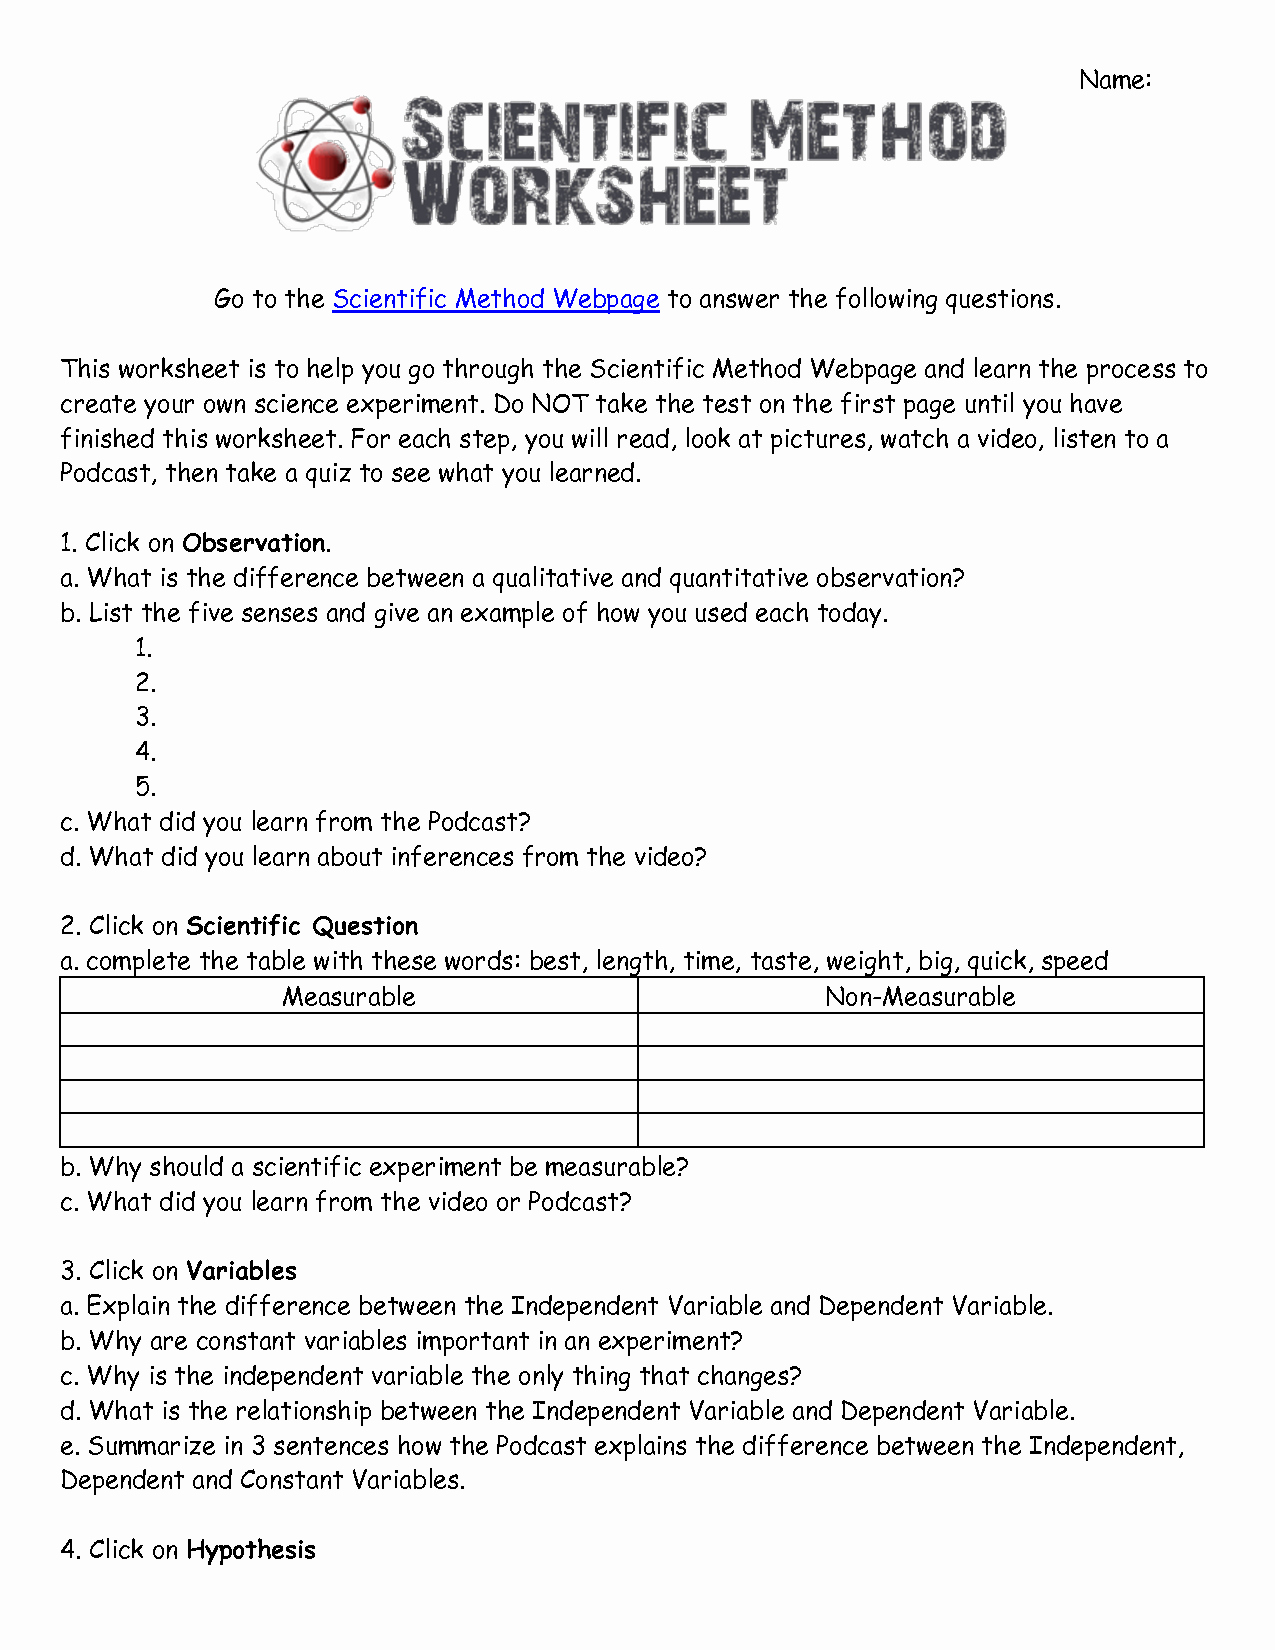 Experimental Design Worksheet Scientific Method Best Of 52 Scientific Method Worksheet Answers Experimental